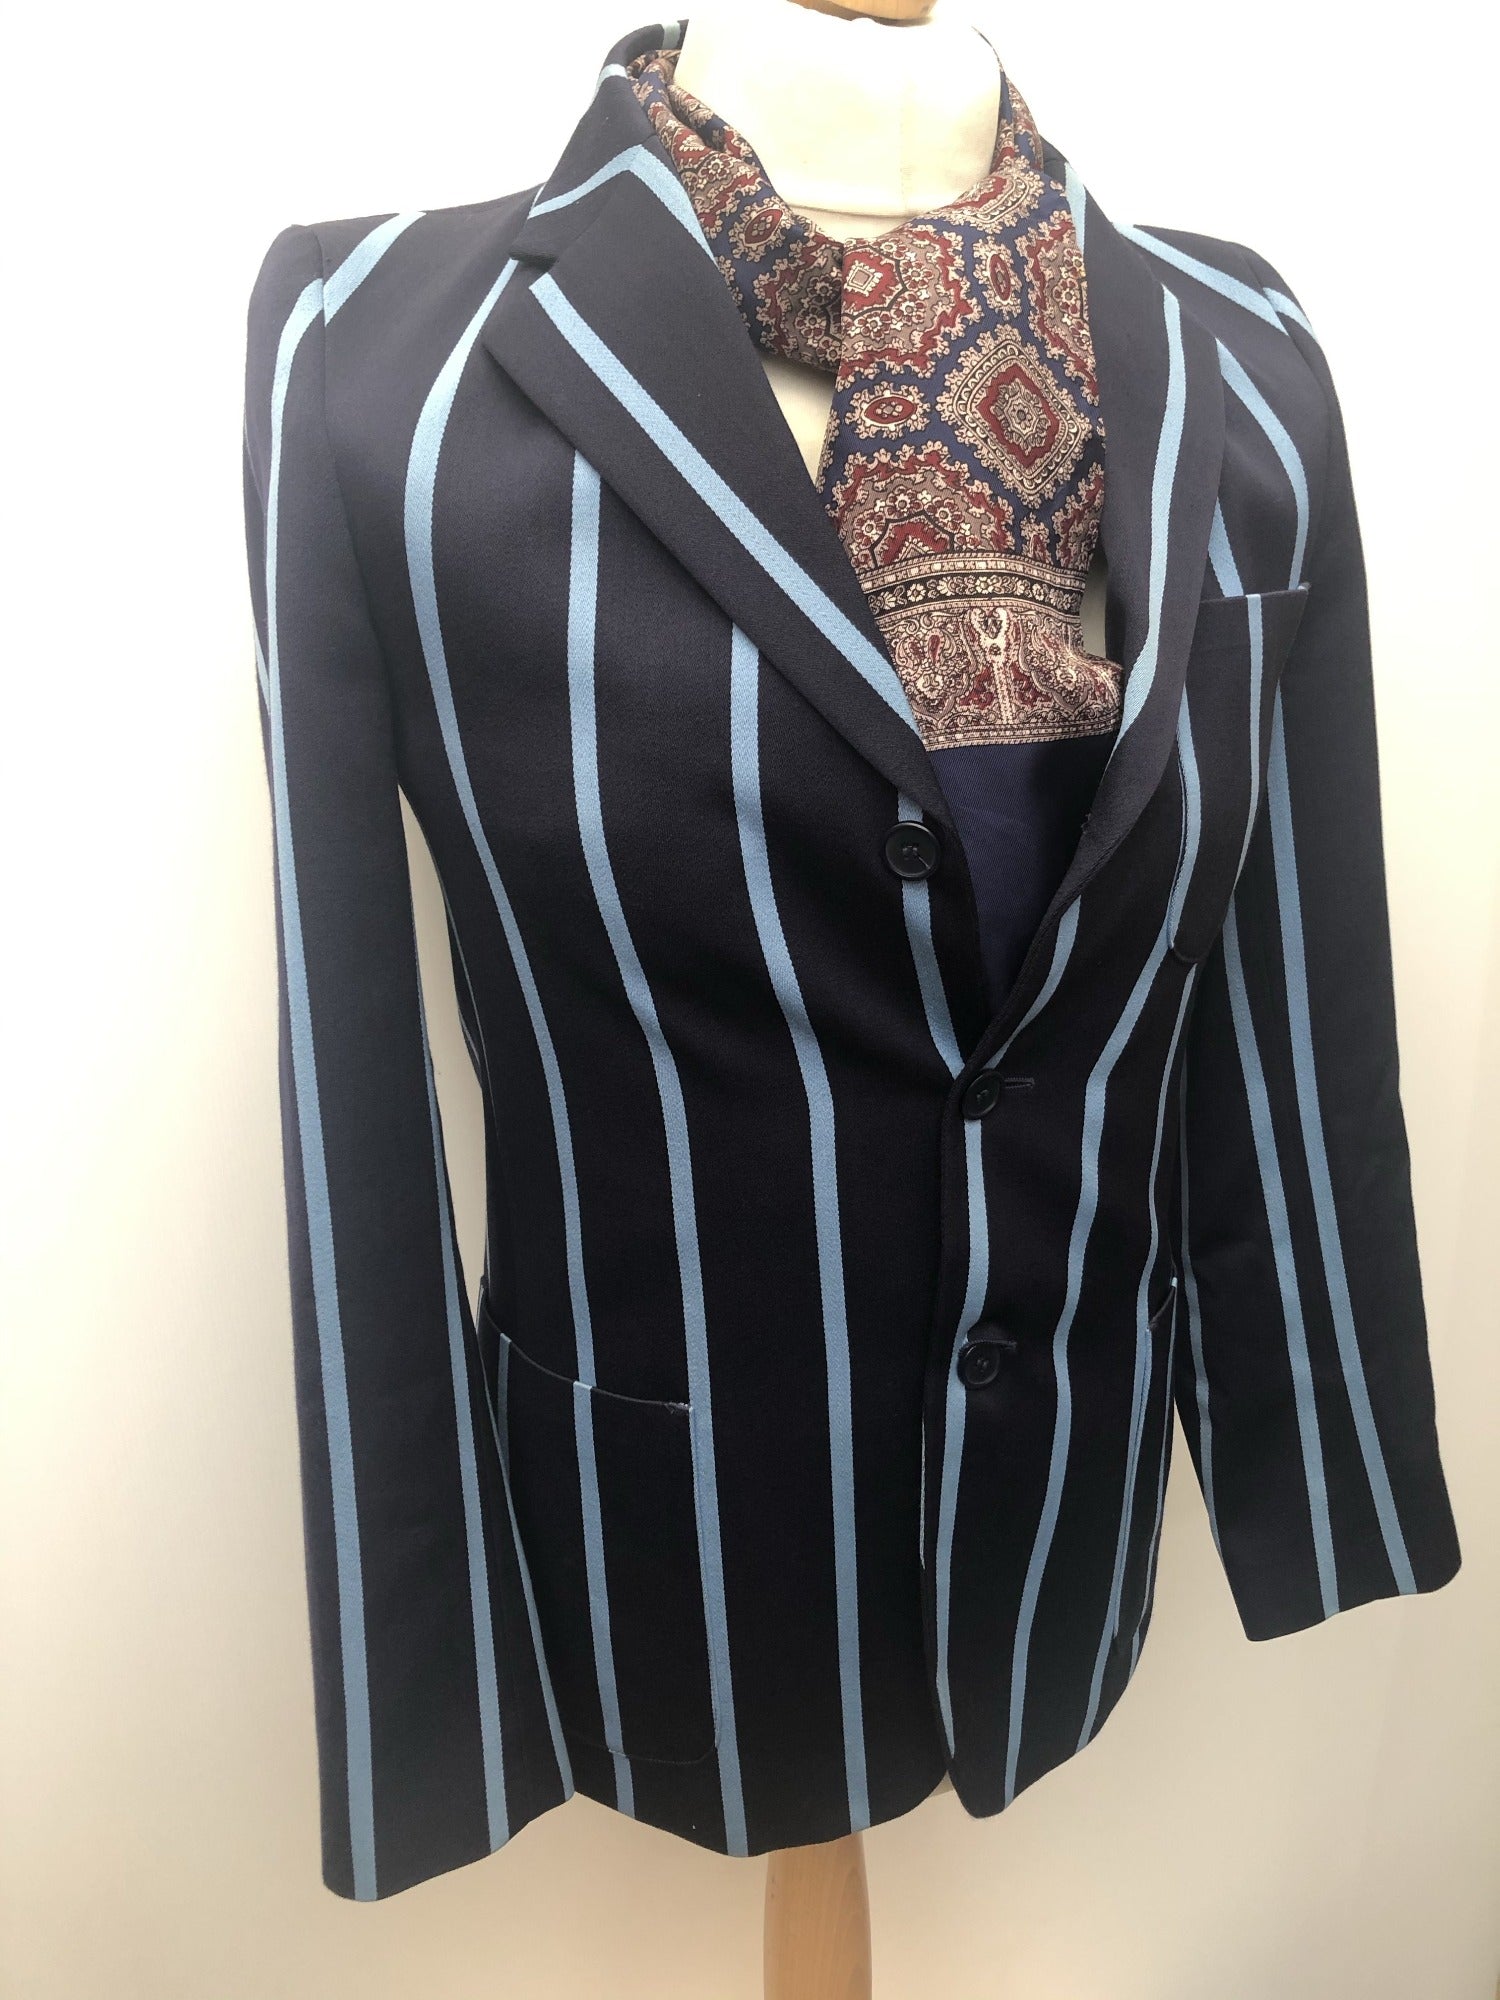 XS  Stripes  Mens jacket  mens  Jacket  boating jacket  blue  Blazer  Adam Waterman  60s style